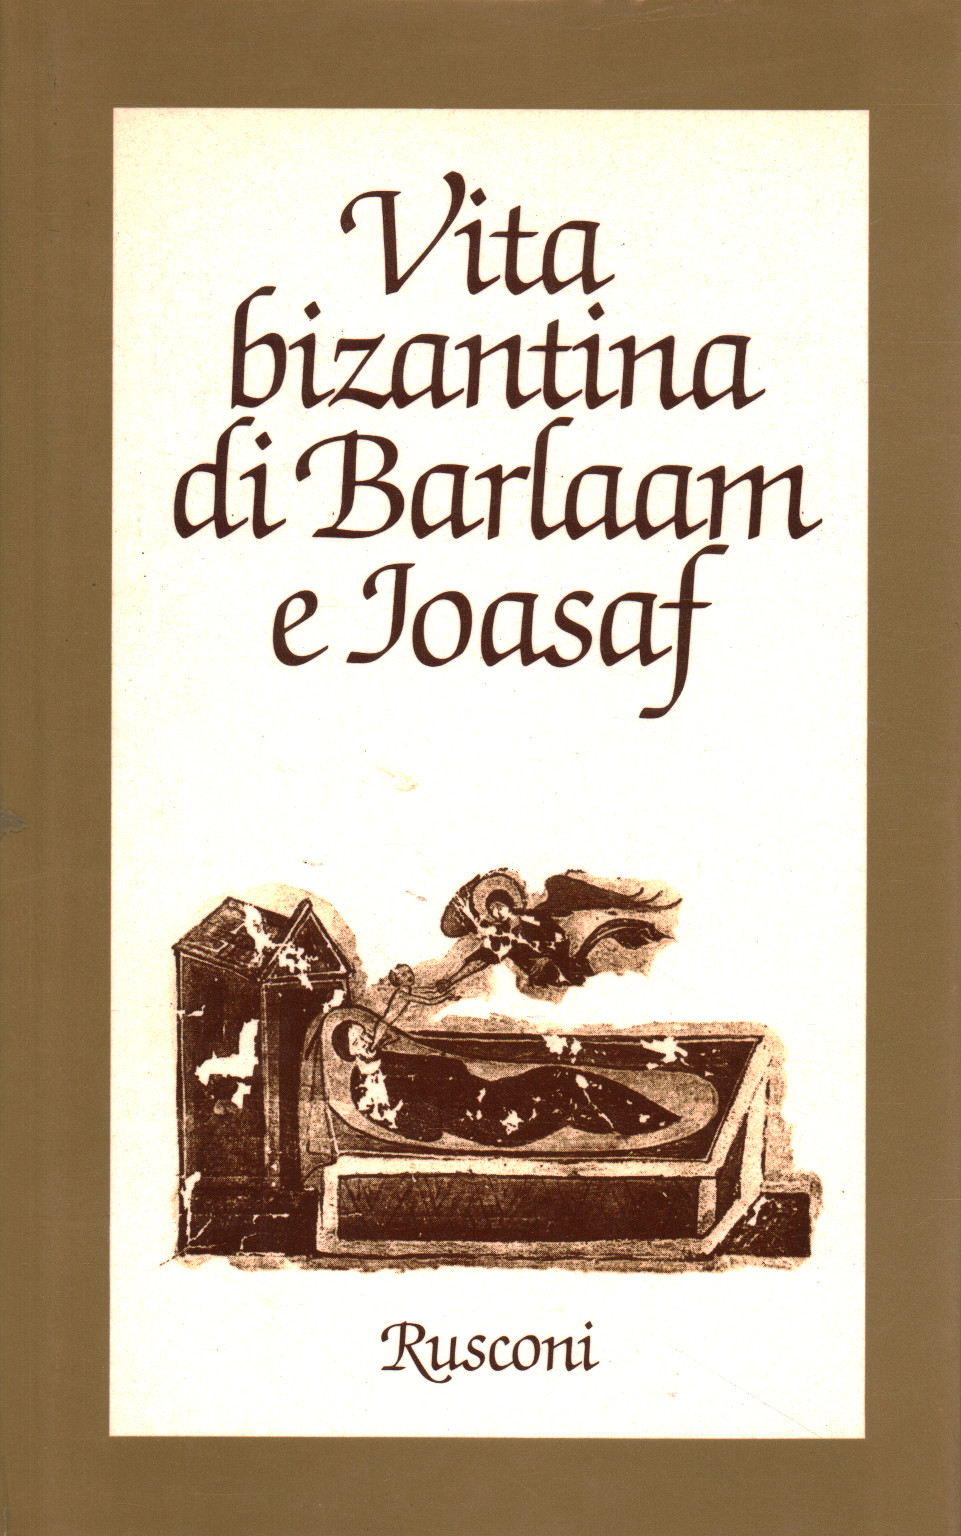 Vida bizantina de Barlaam y Joasaph